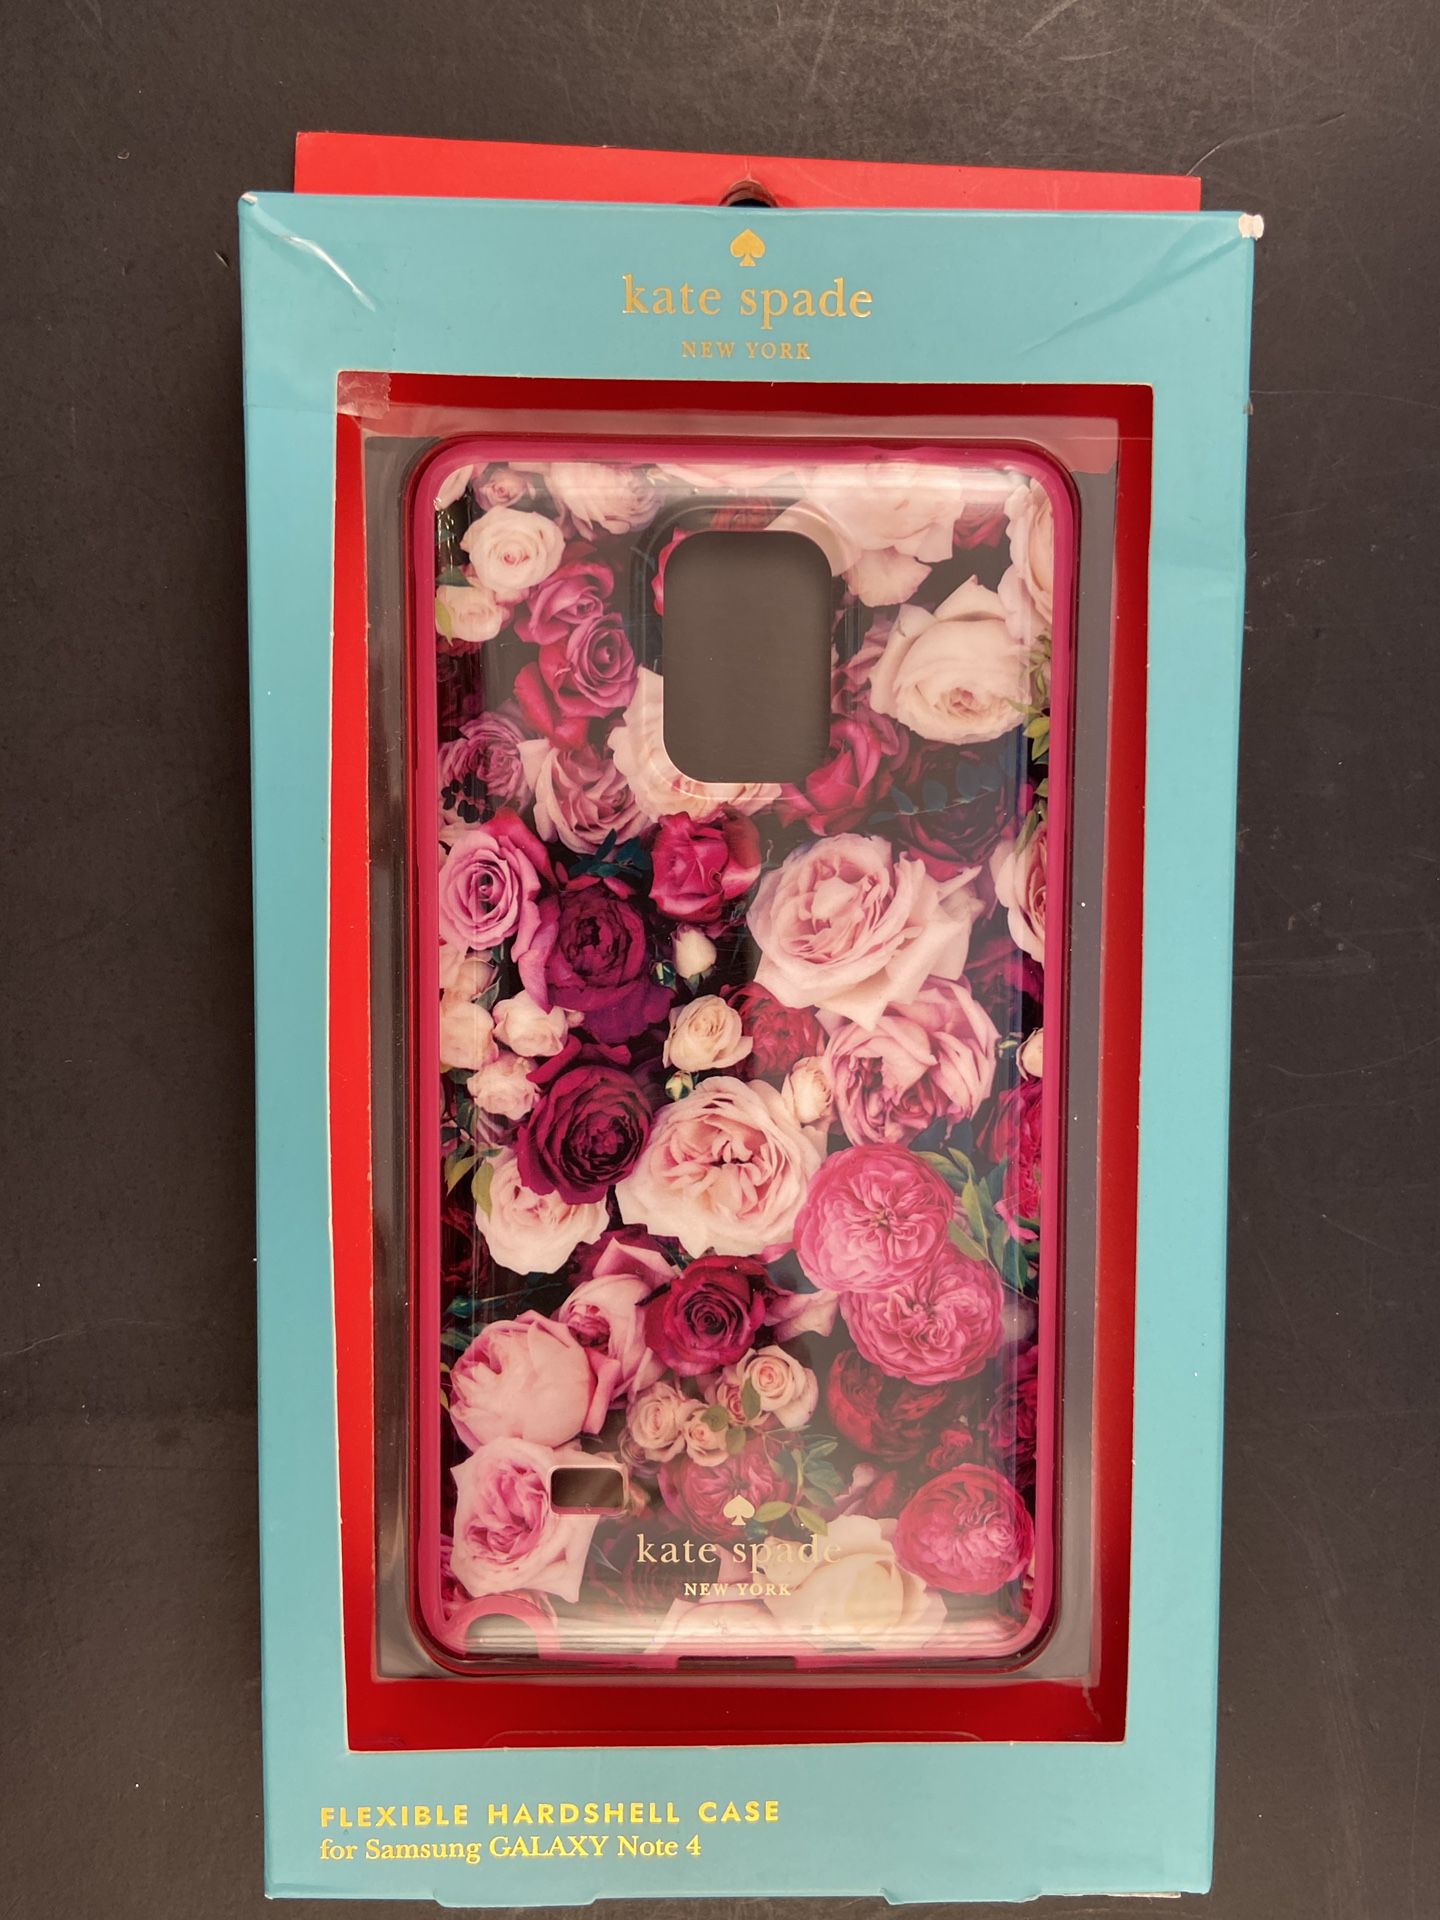 NEW Kate Spade New York Rose Samsung Galaxy Note 4 Phone Case—Flexible Hardshell Case